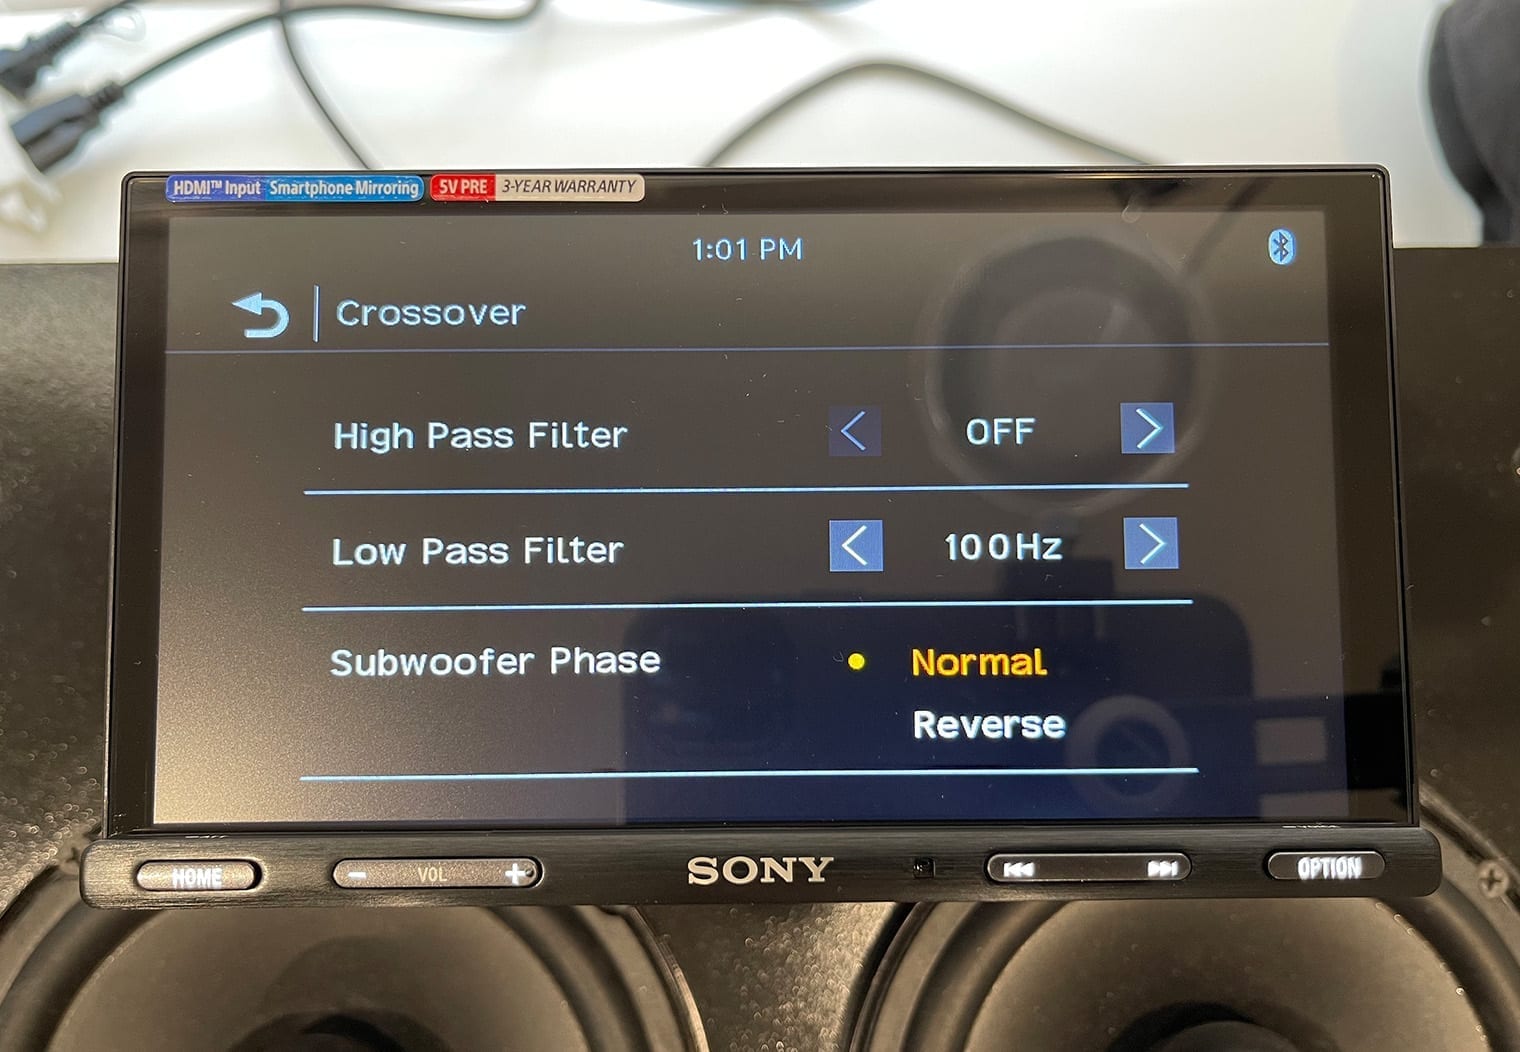 Sony XAV-AX5600 crossover settings